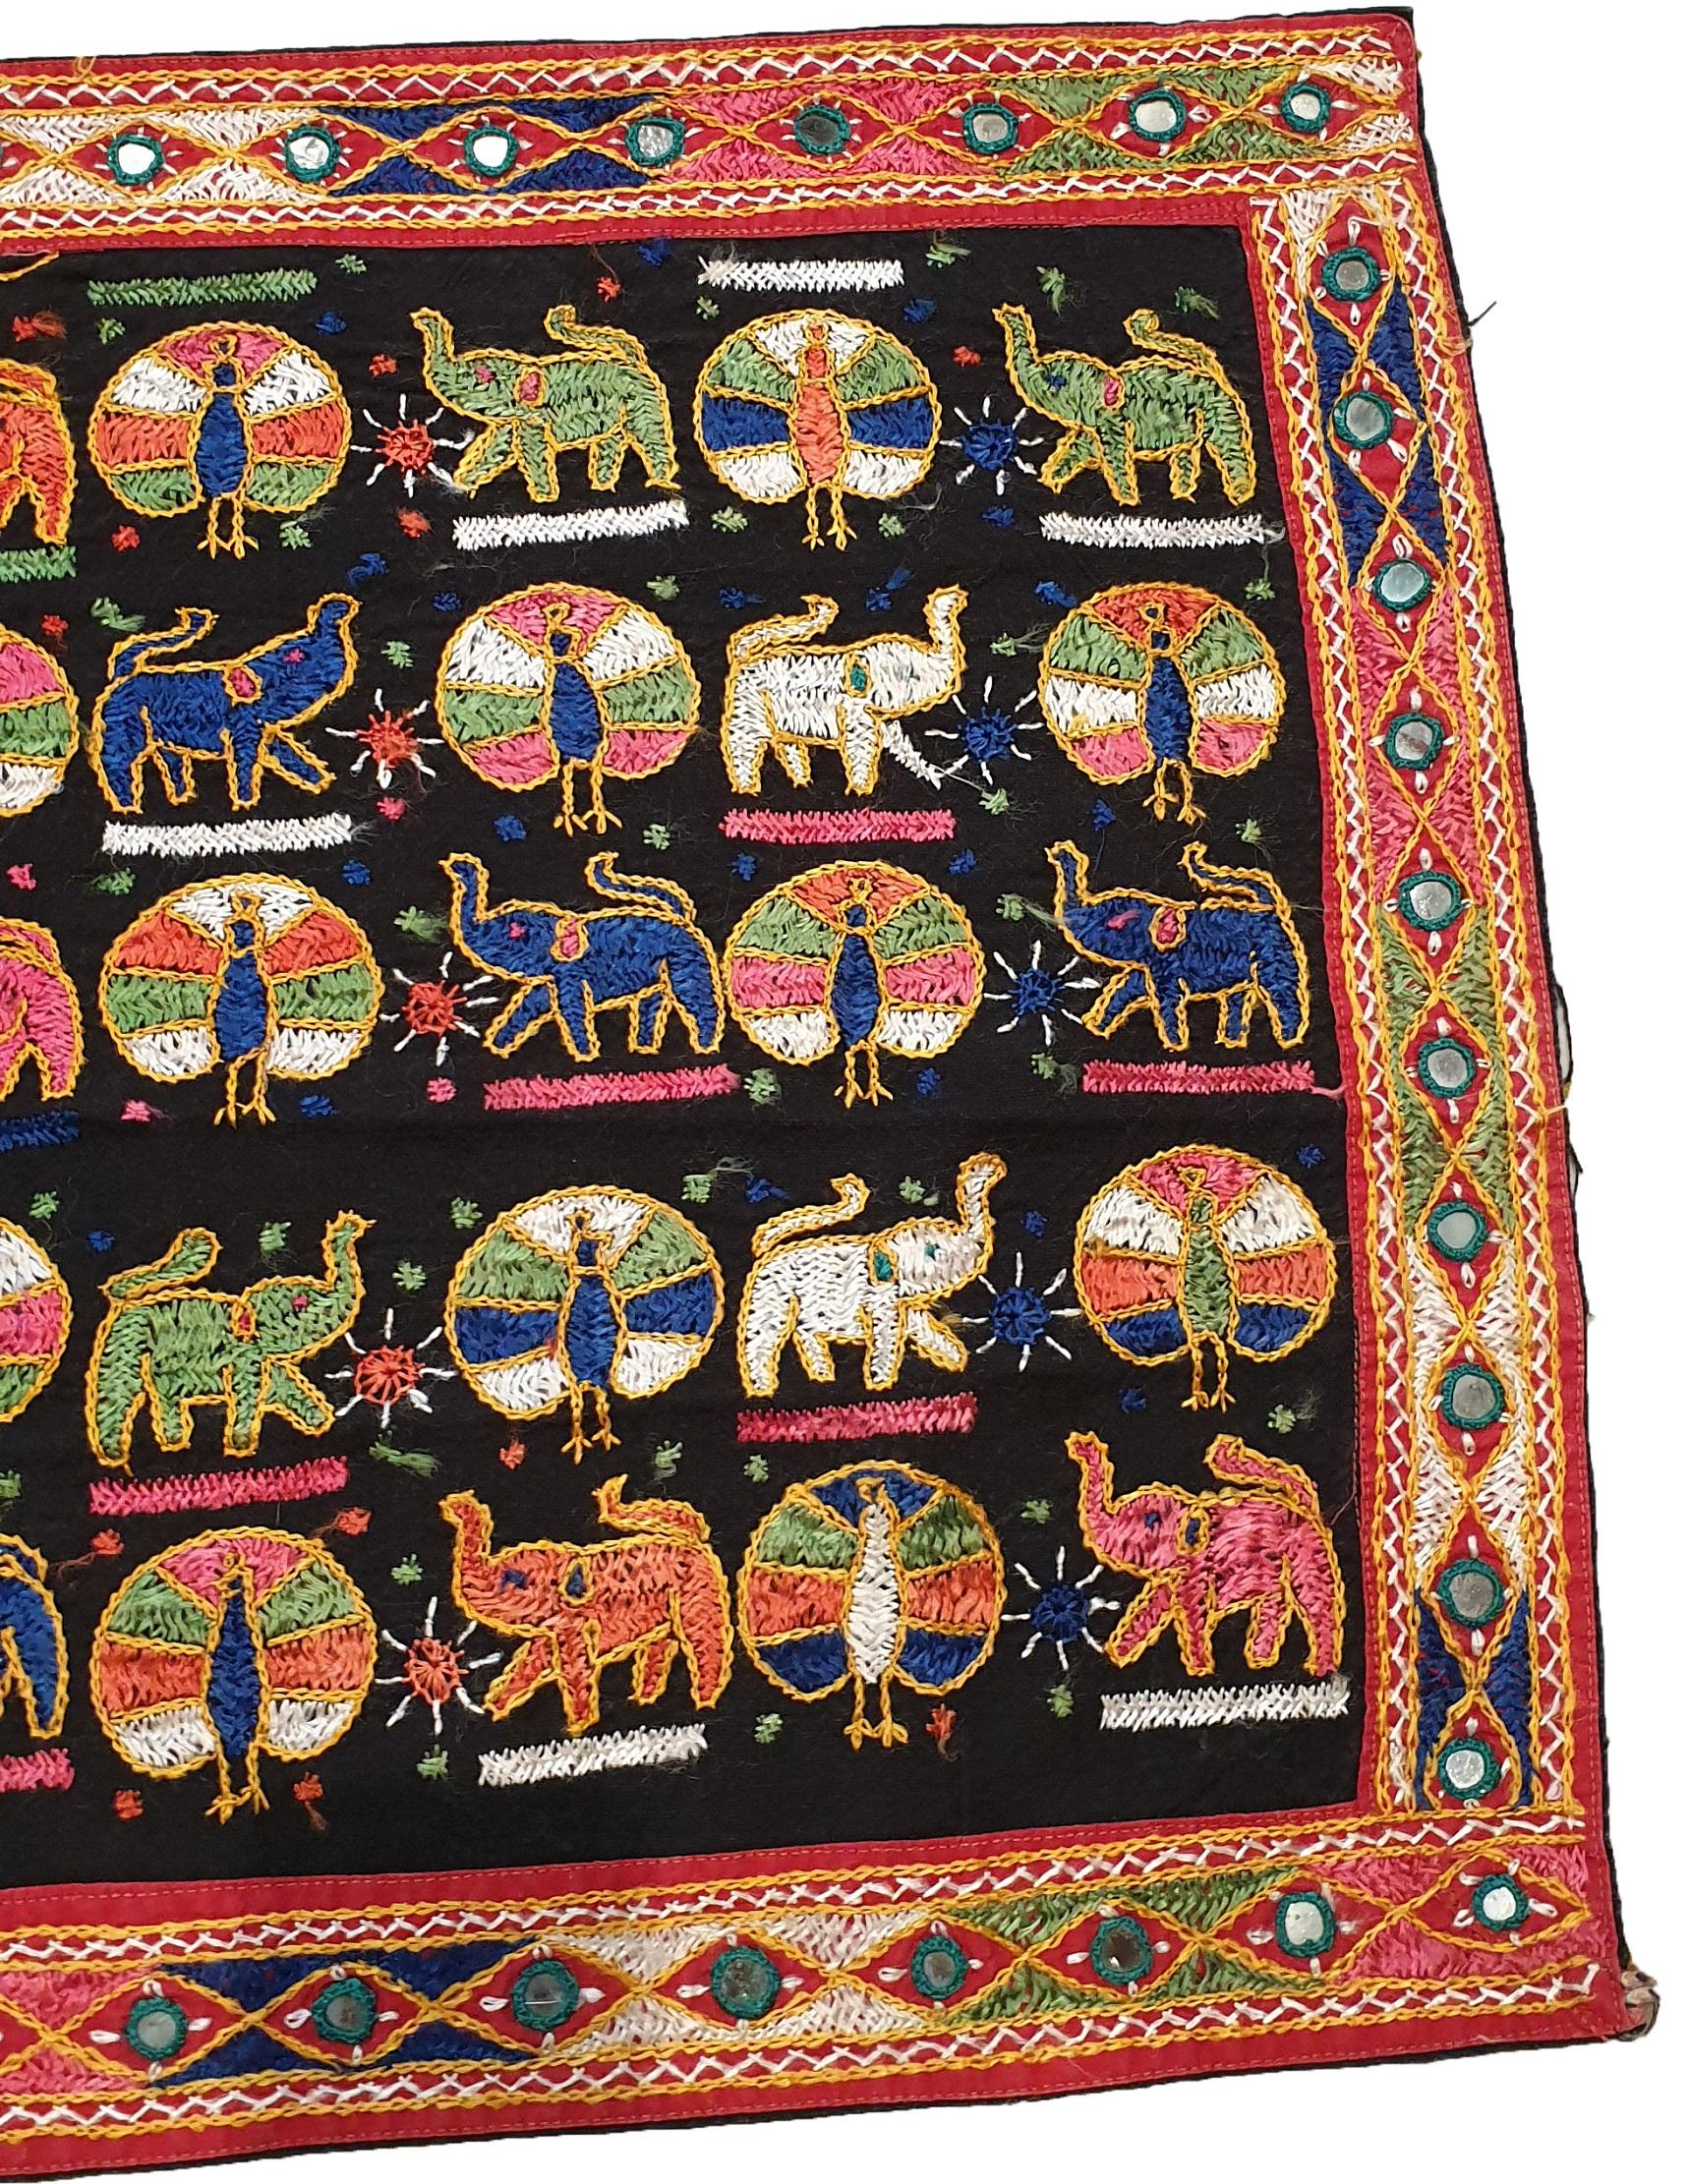 720 - 20th century Indian textile.